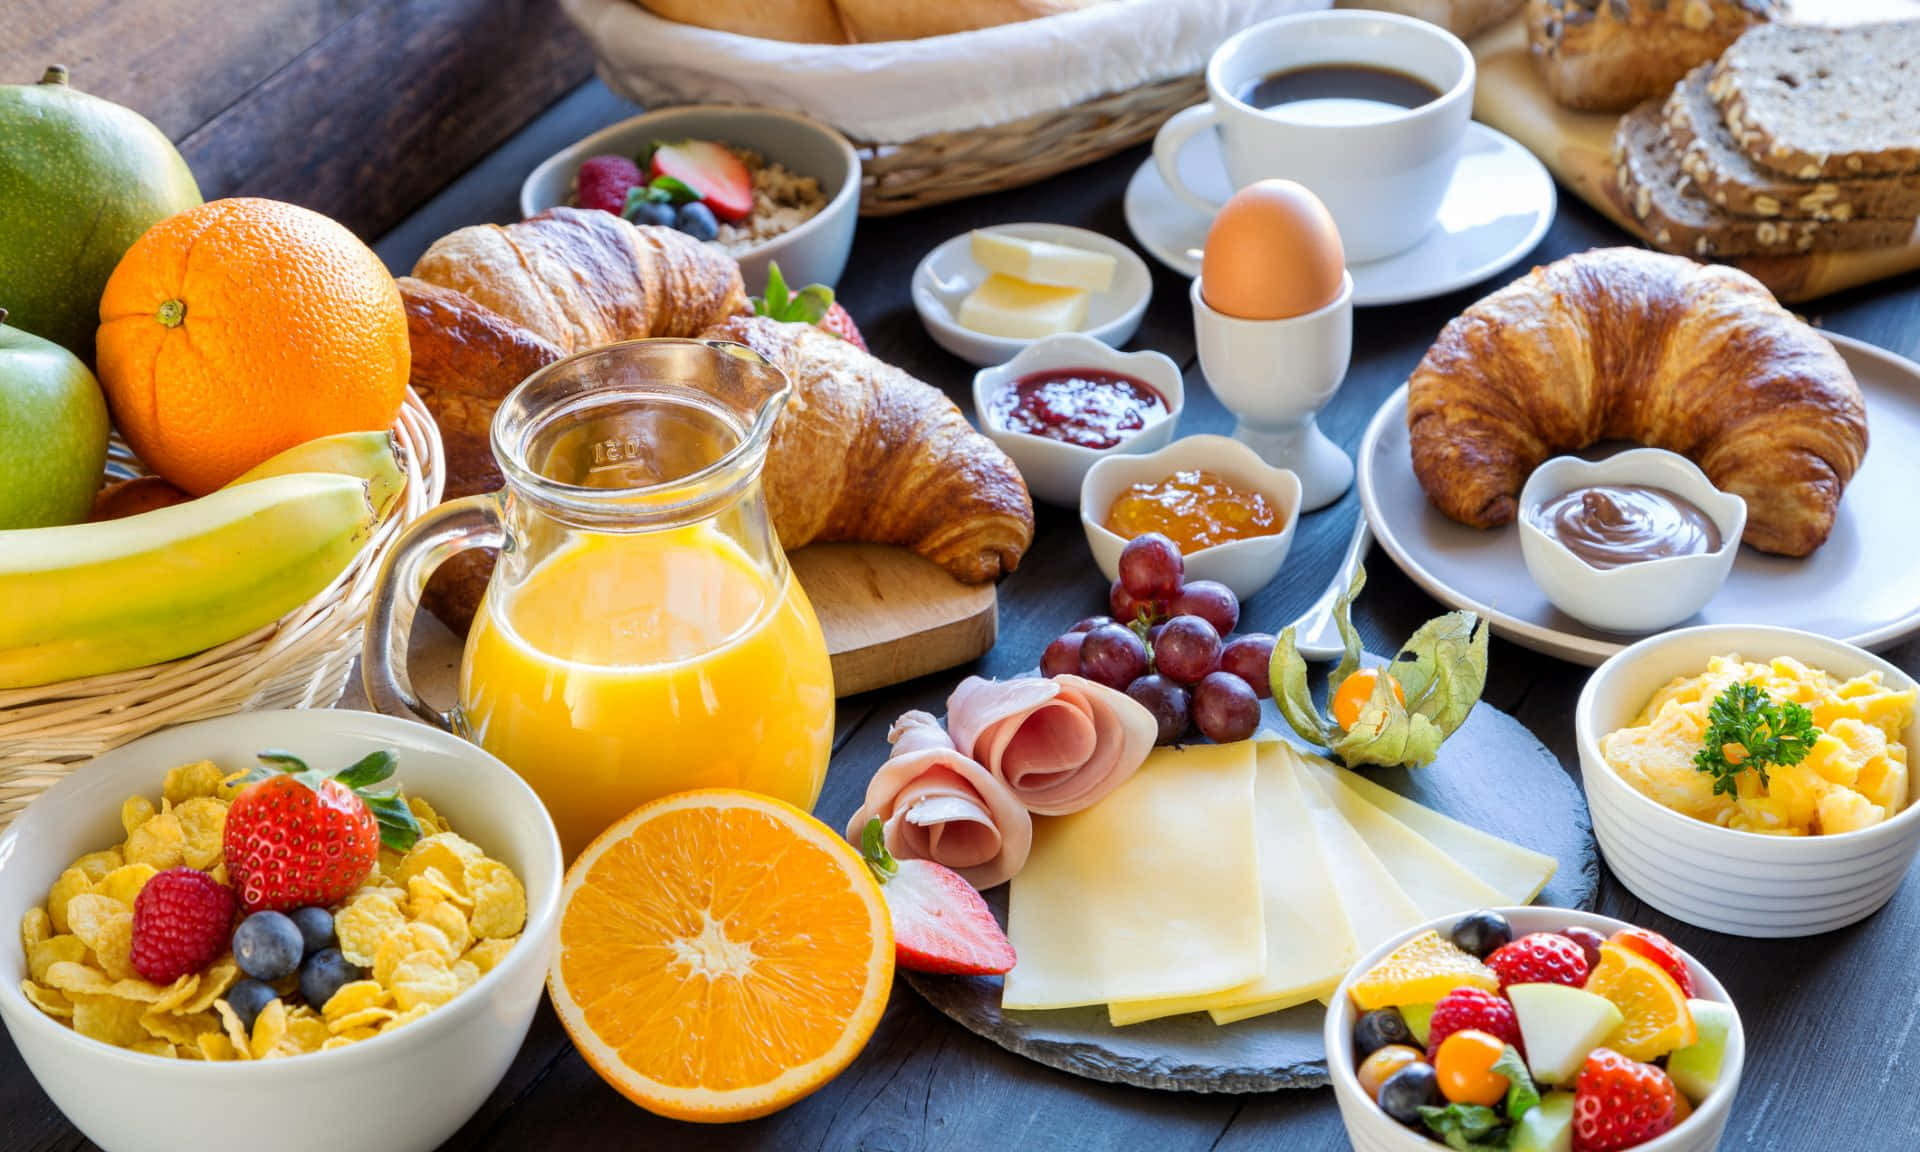 breakfast with fruit, croissants, orange juice and juice